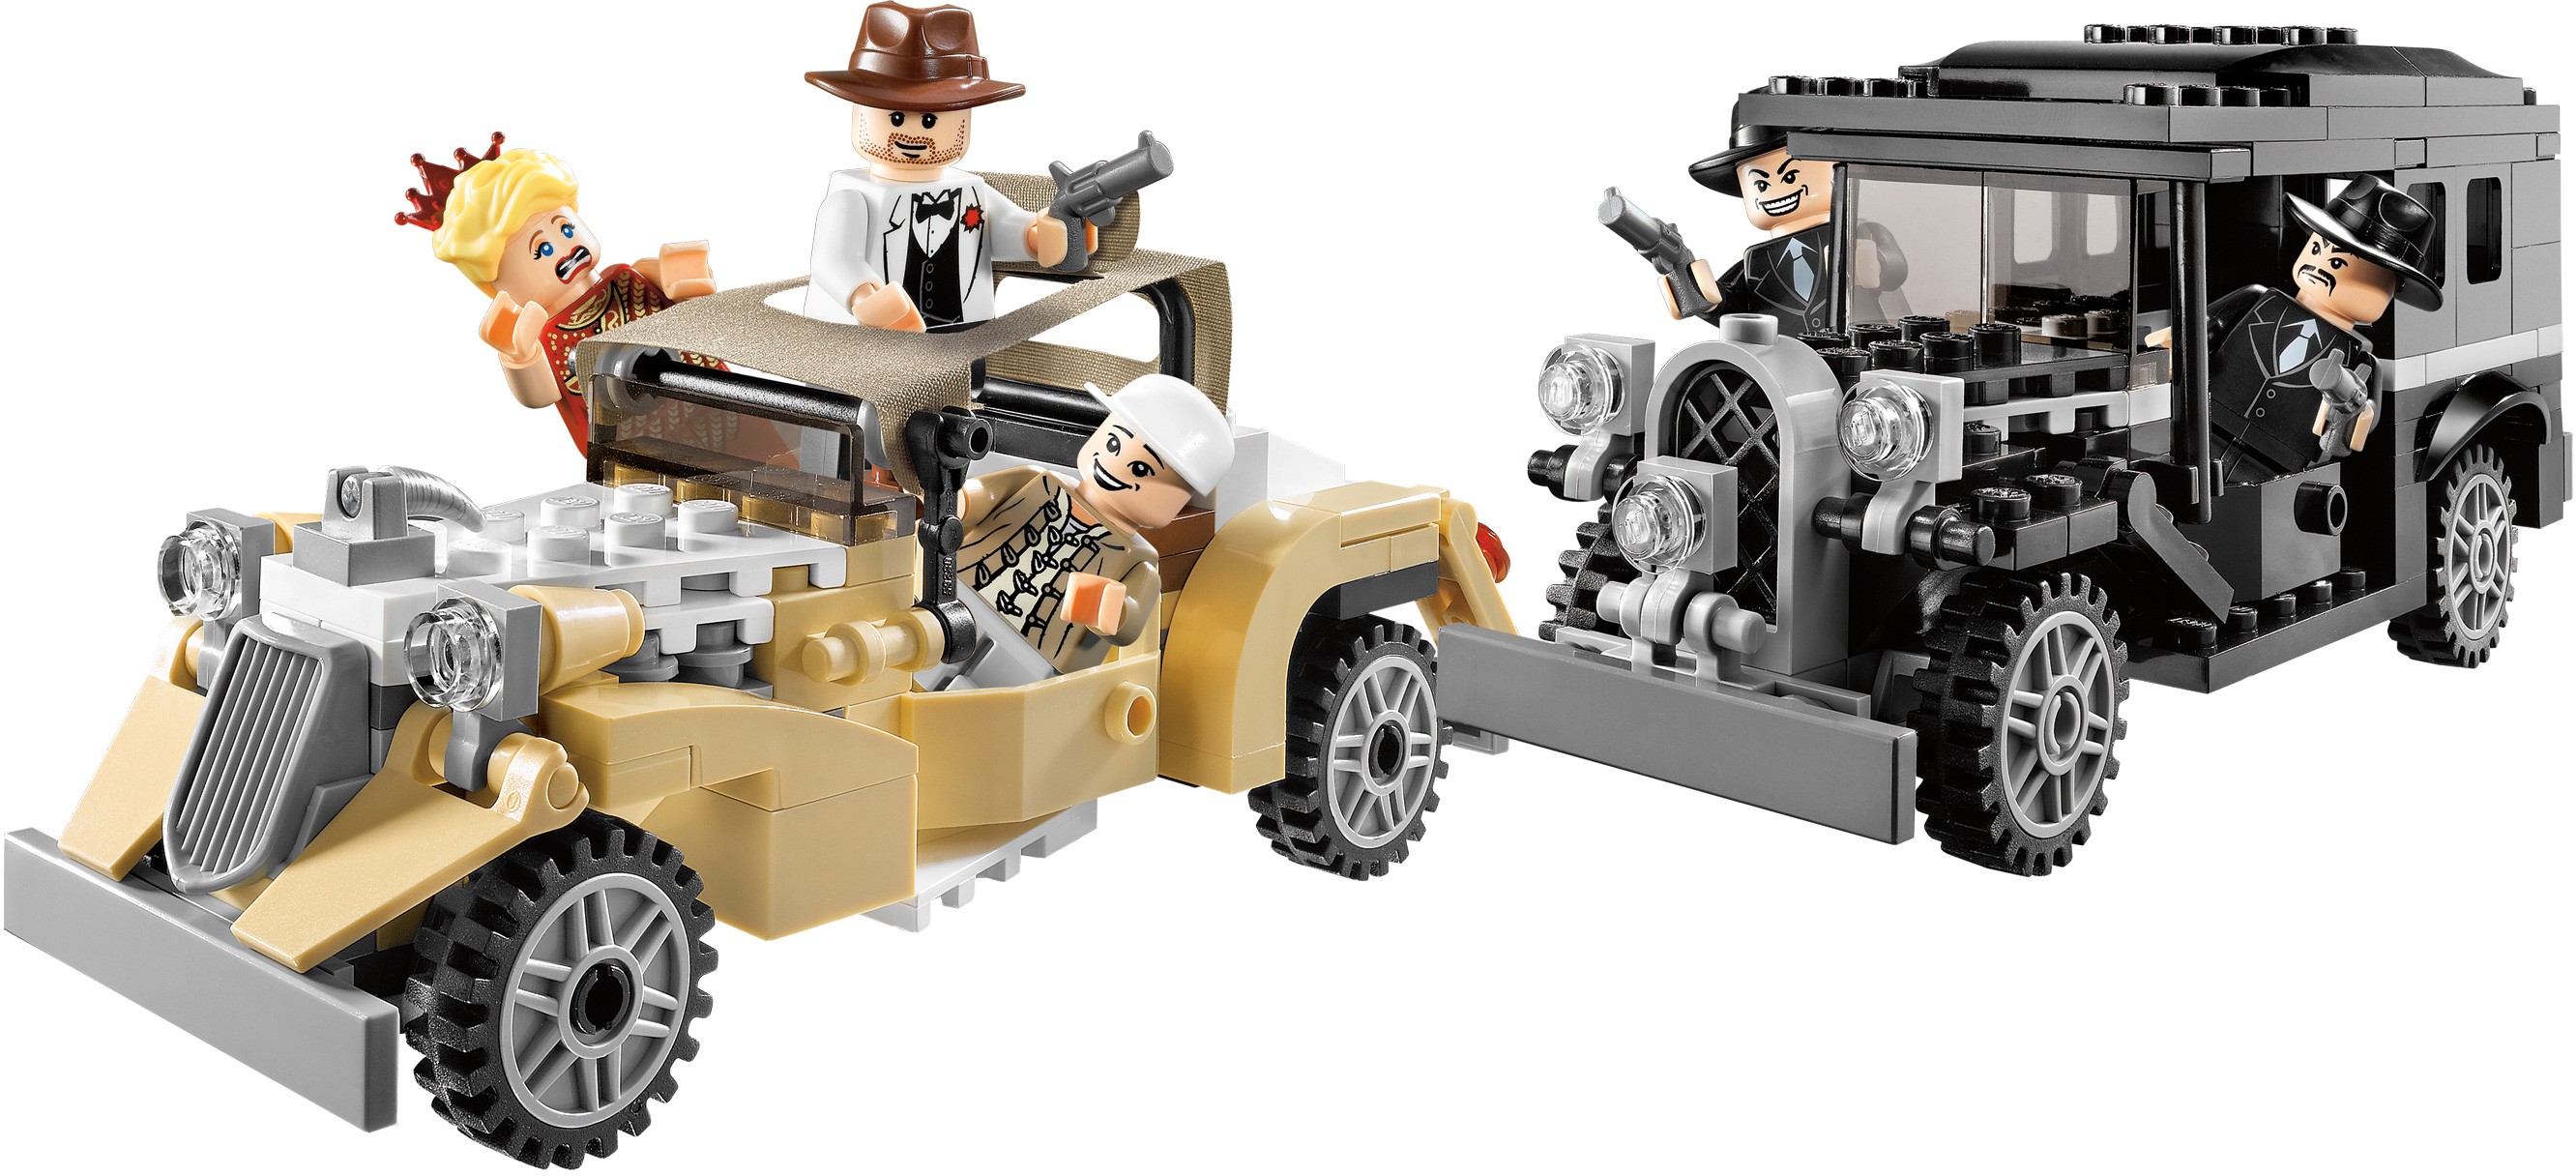 Lego Short Round Minifigure from sets 7682 7199 Indiana Jones NEW iaj025 